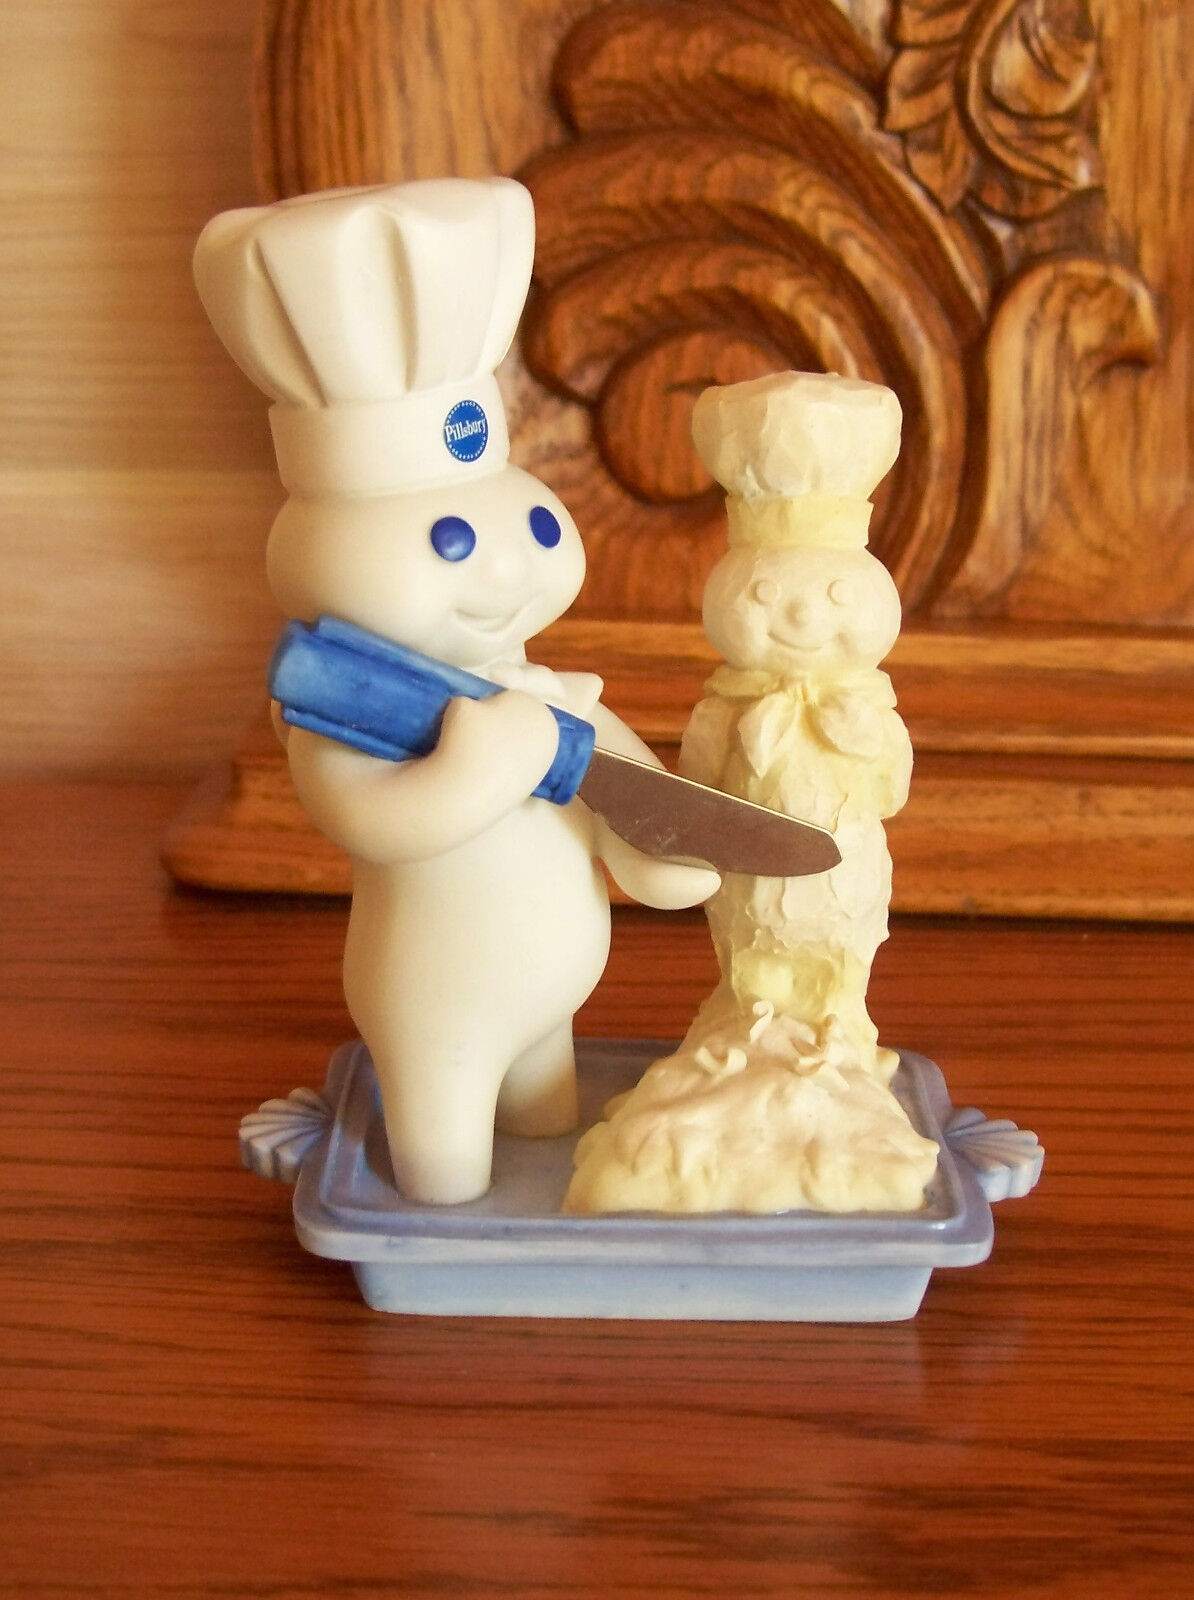 Pillsbury Doughboy SELF PORTRAIT IN BUTTER Figurine Bake-Off Contest Danbury 